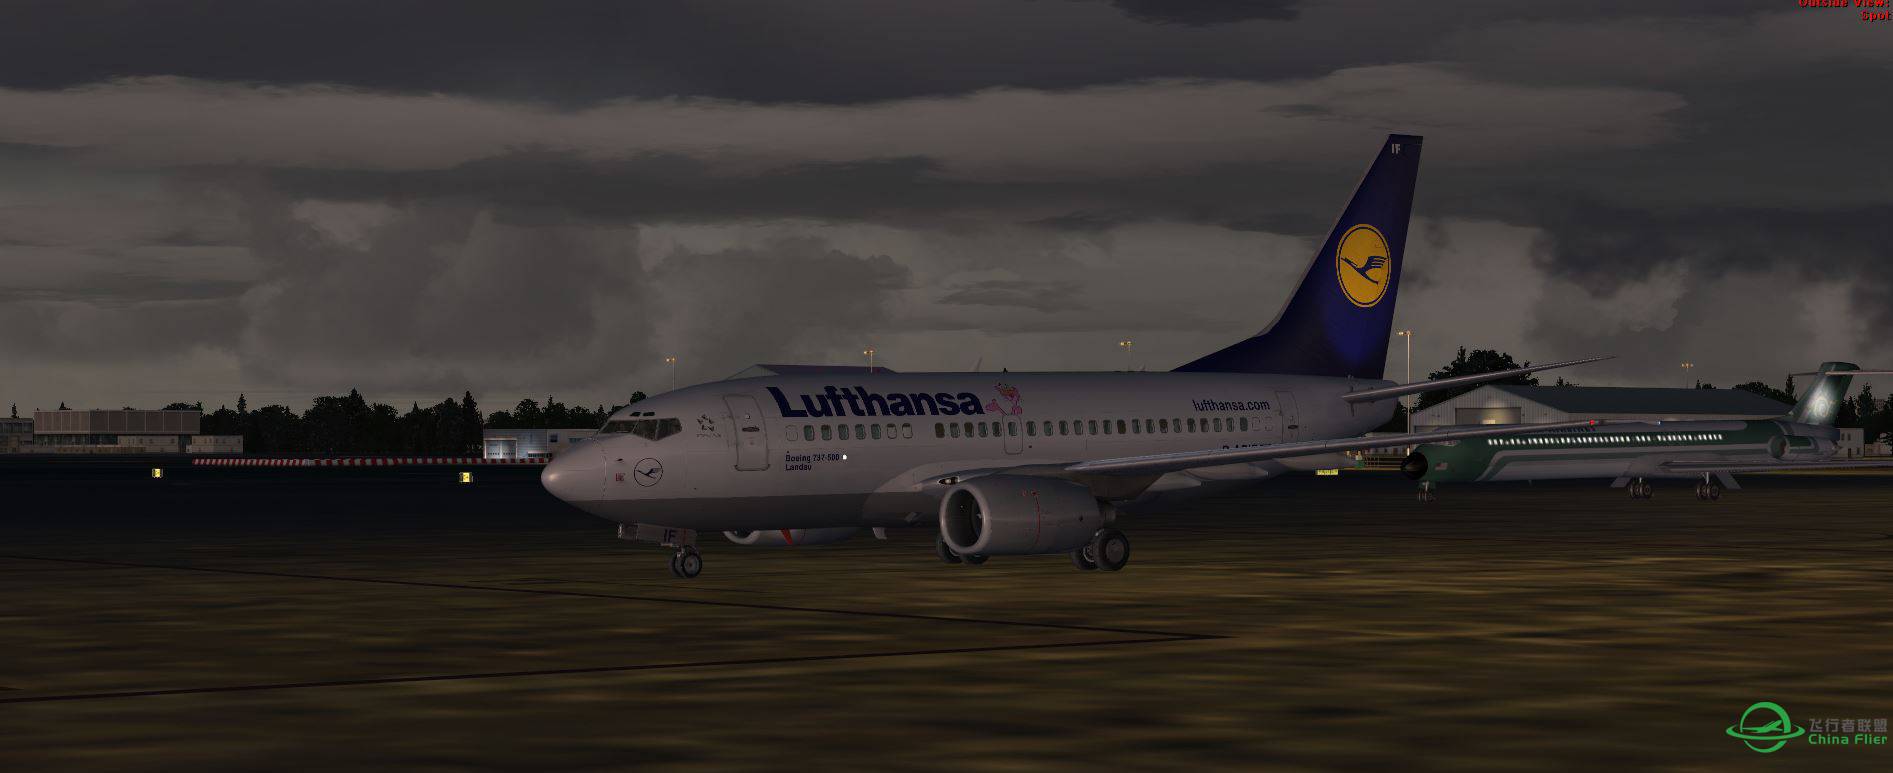 B737 Lufthansa-3121 